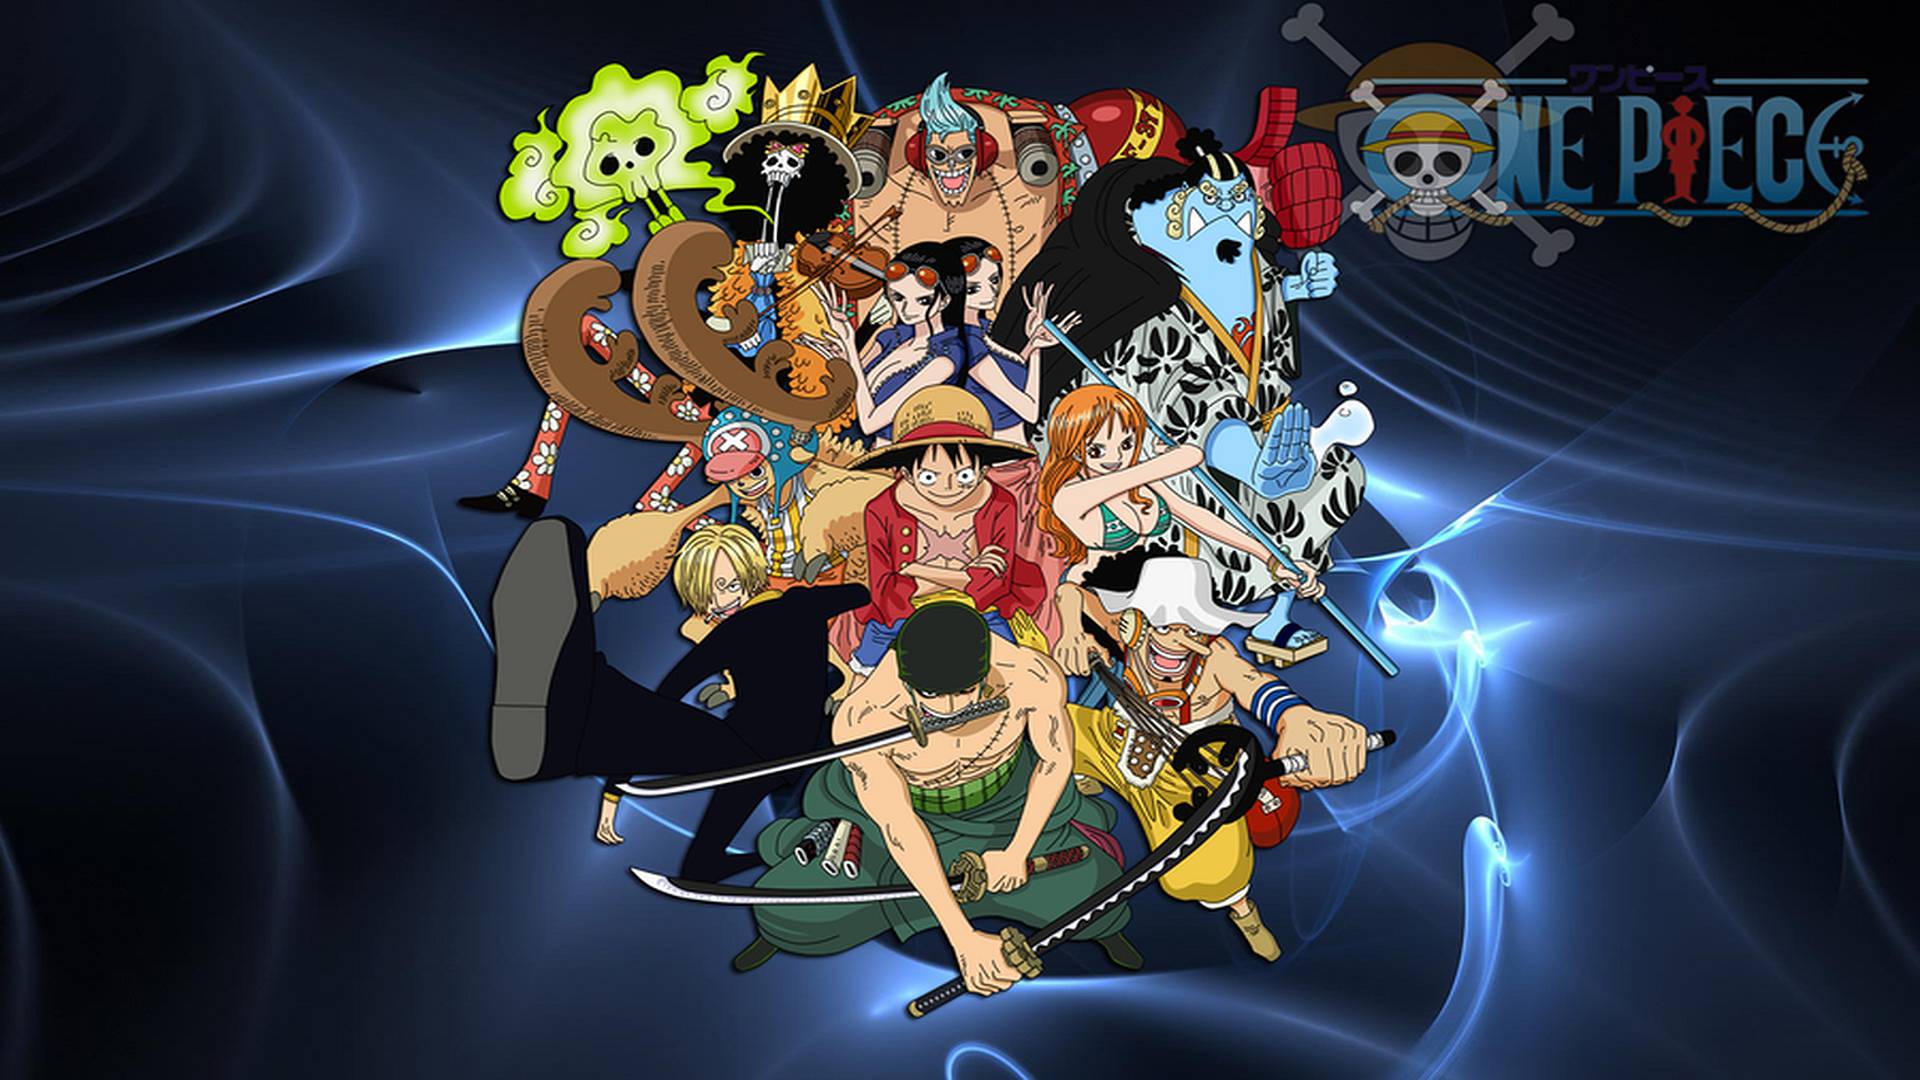 Best Download Gambar One Piece Hd | Goodgambar